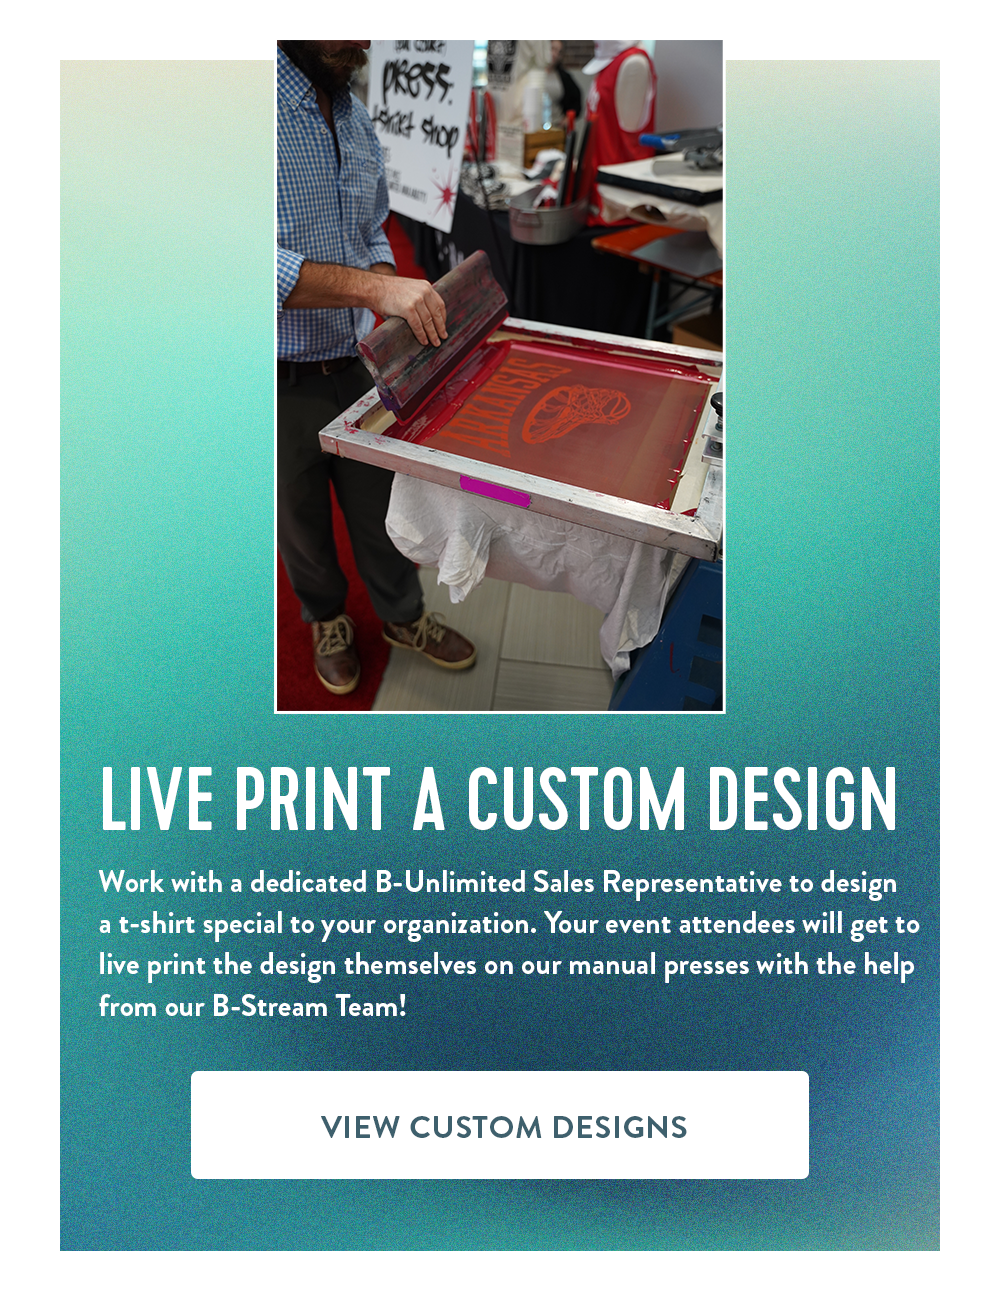 live printing your custom design